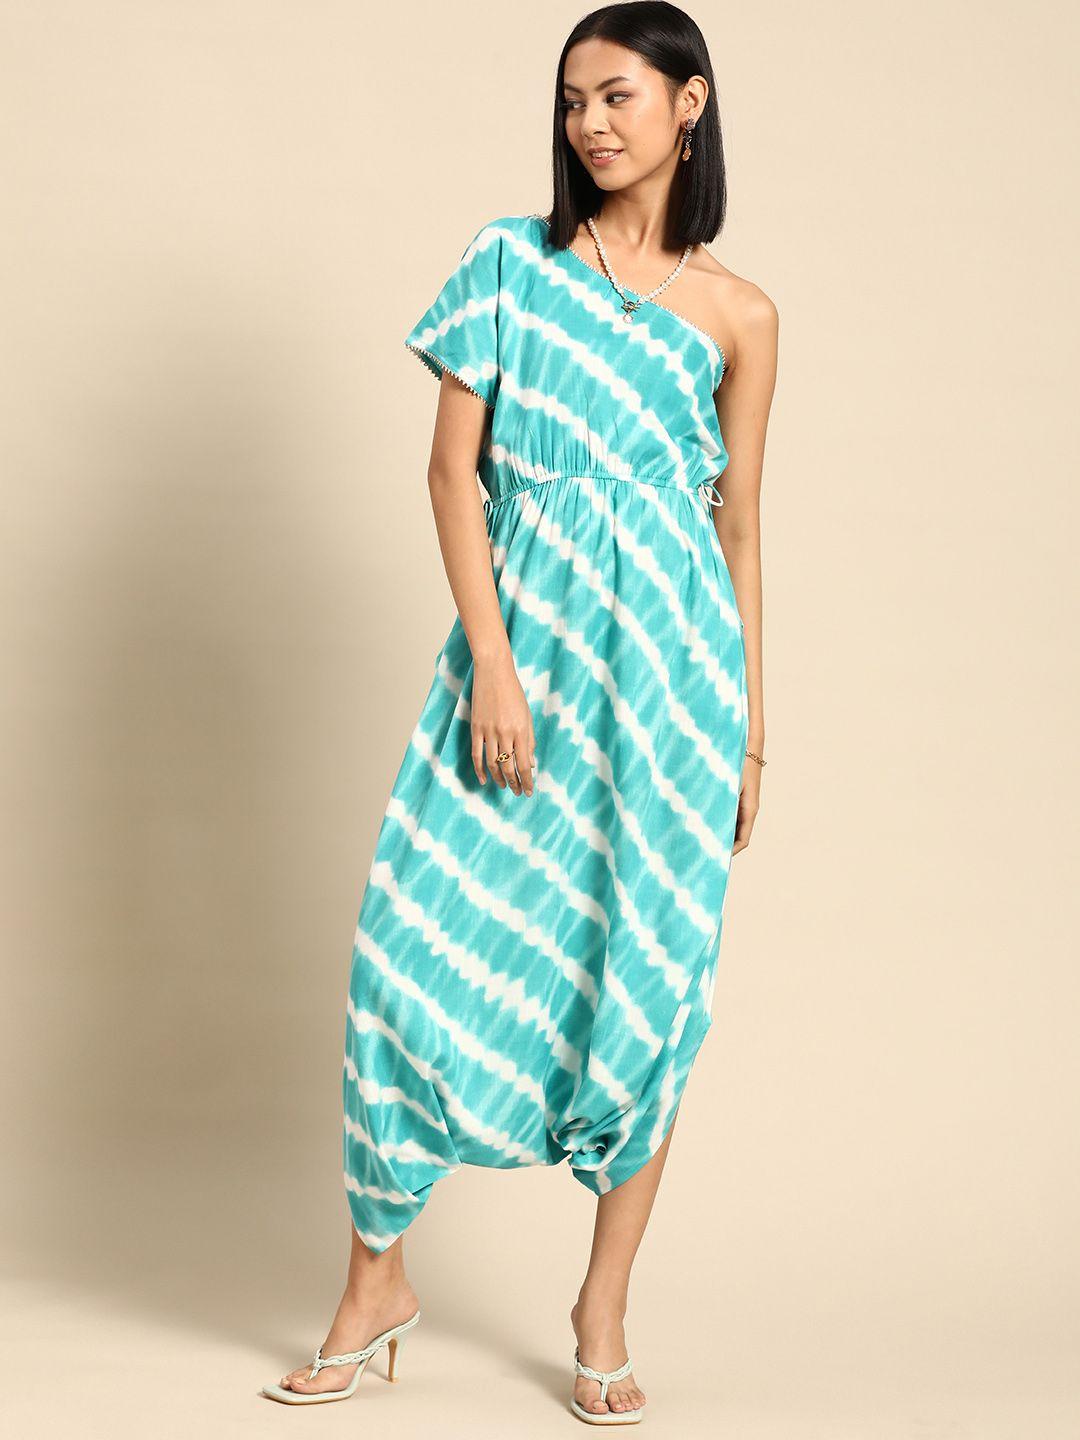 mabish by sonal jain turquoise blue & white striped dhoti jumpsuit